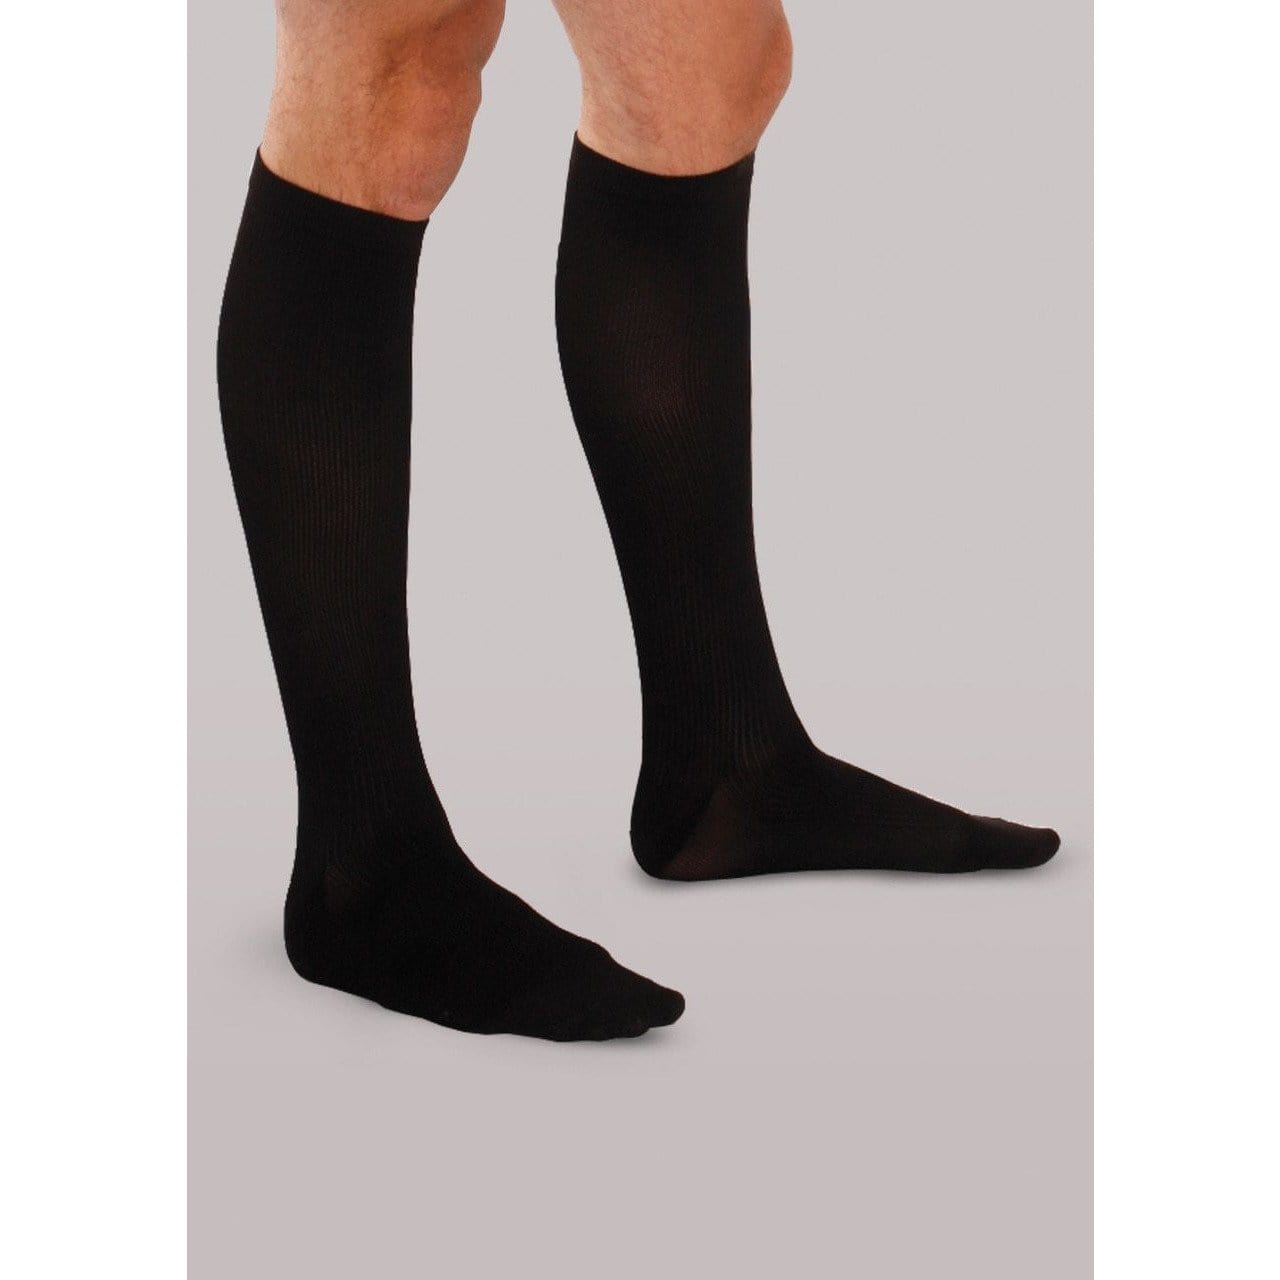 7 Types of Socks  Sock Lengths and Fabrics Explained